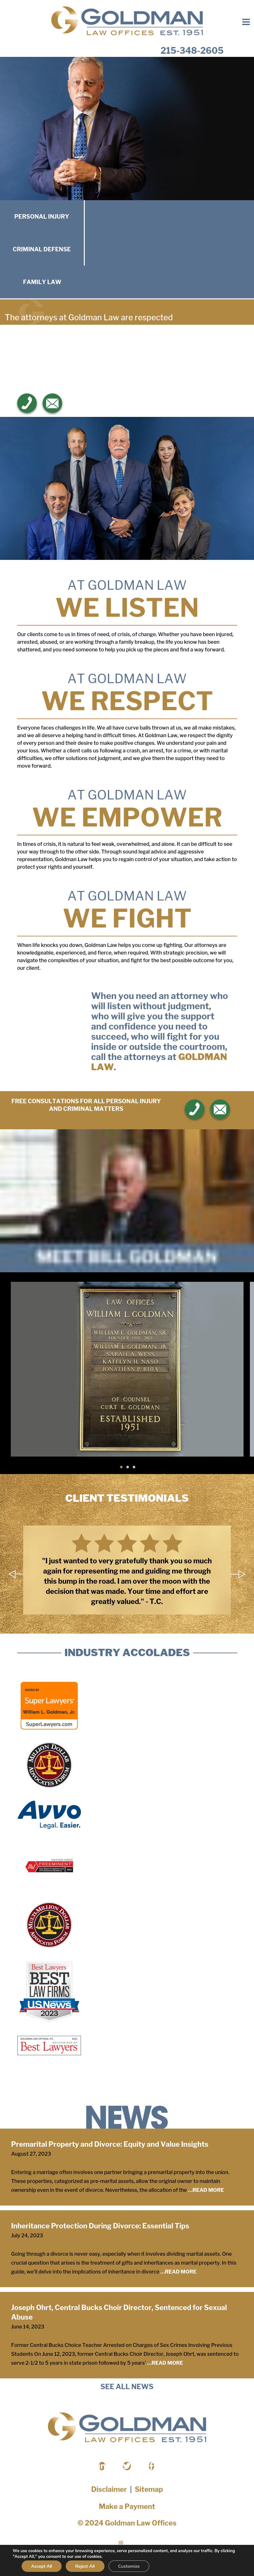 Goldman Law Offices - Doylestown PA Lawyers